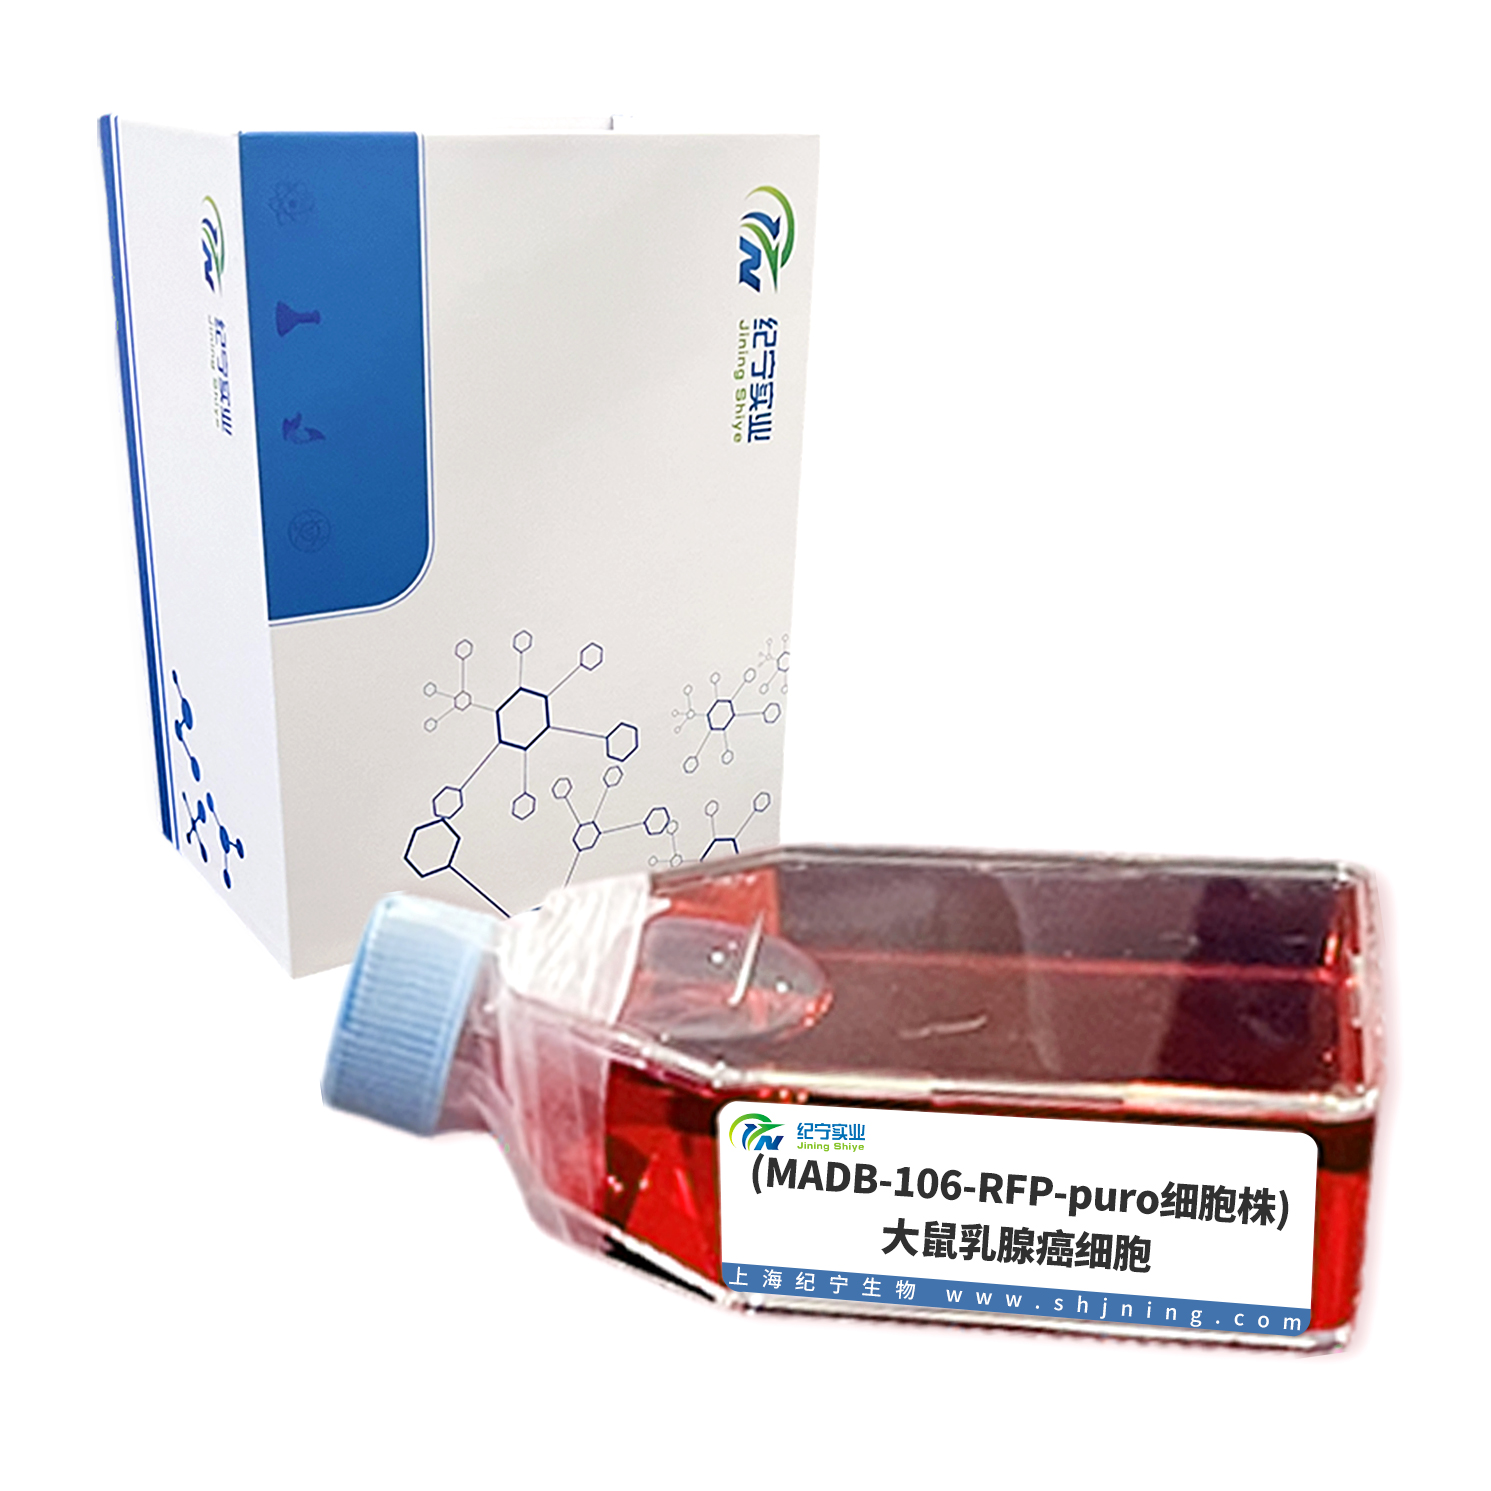 (MADB-106-RFP-puro细胞株)大鼠乳腺癌细胞